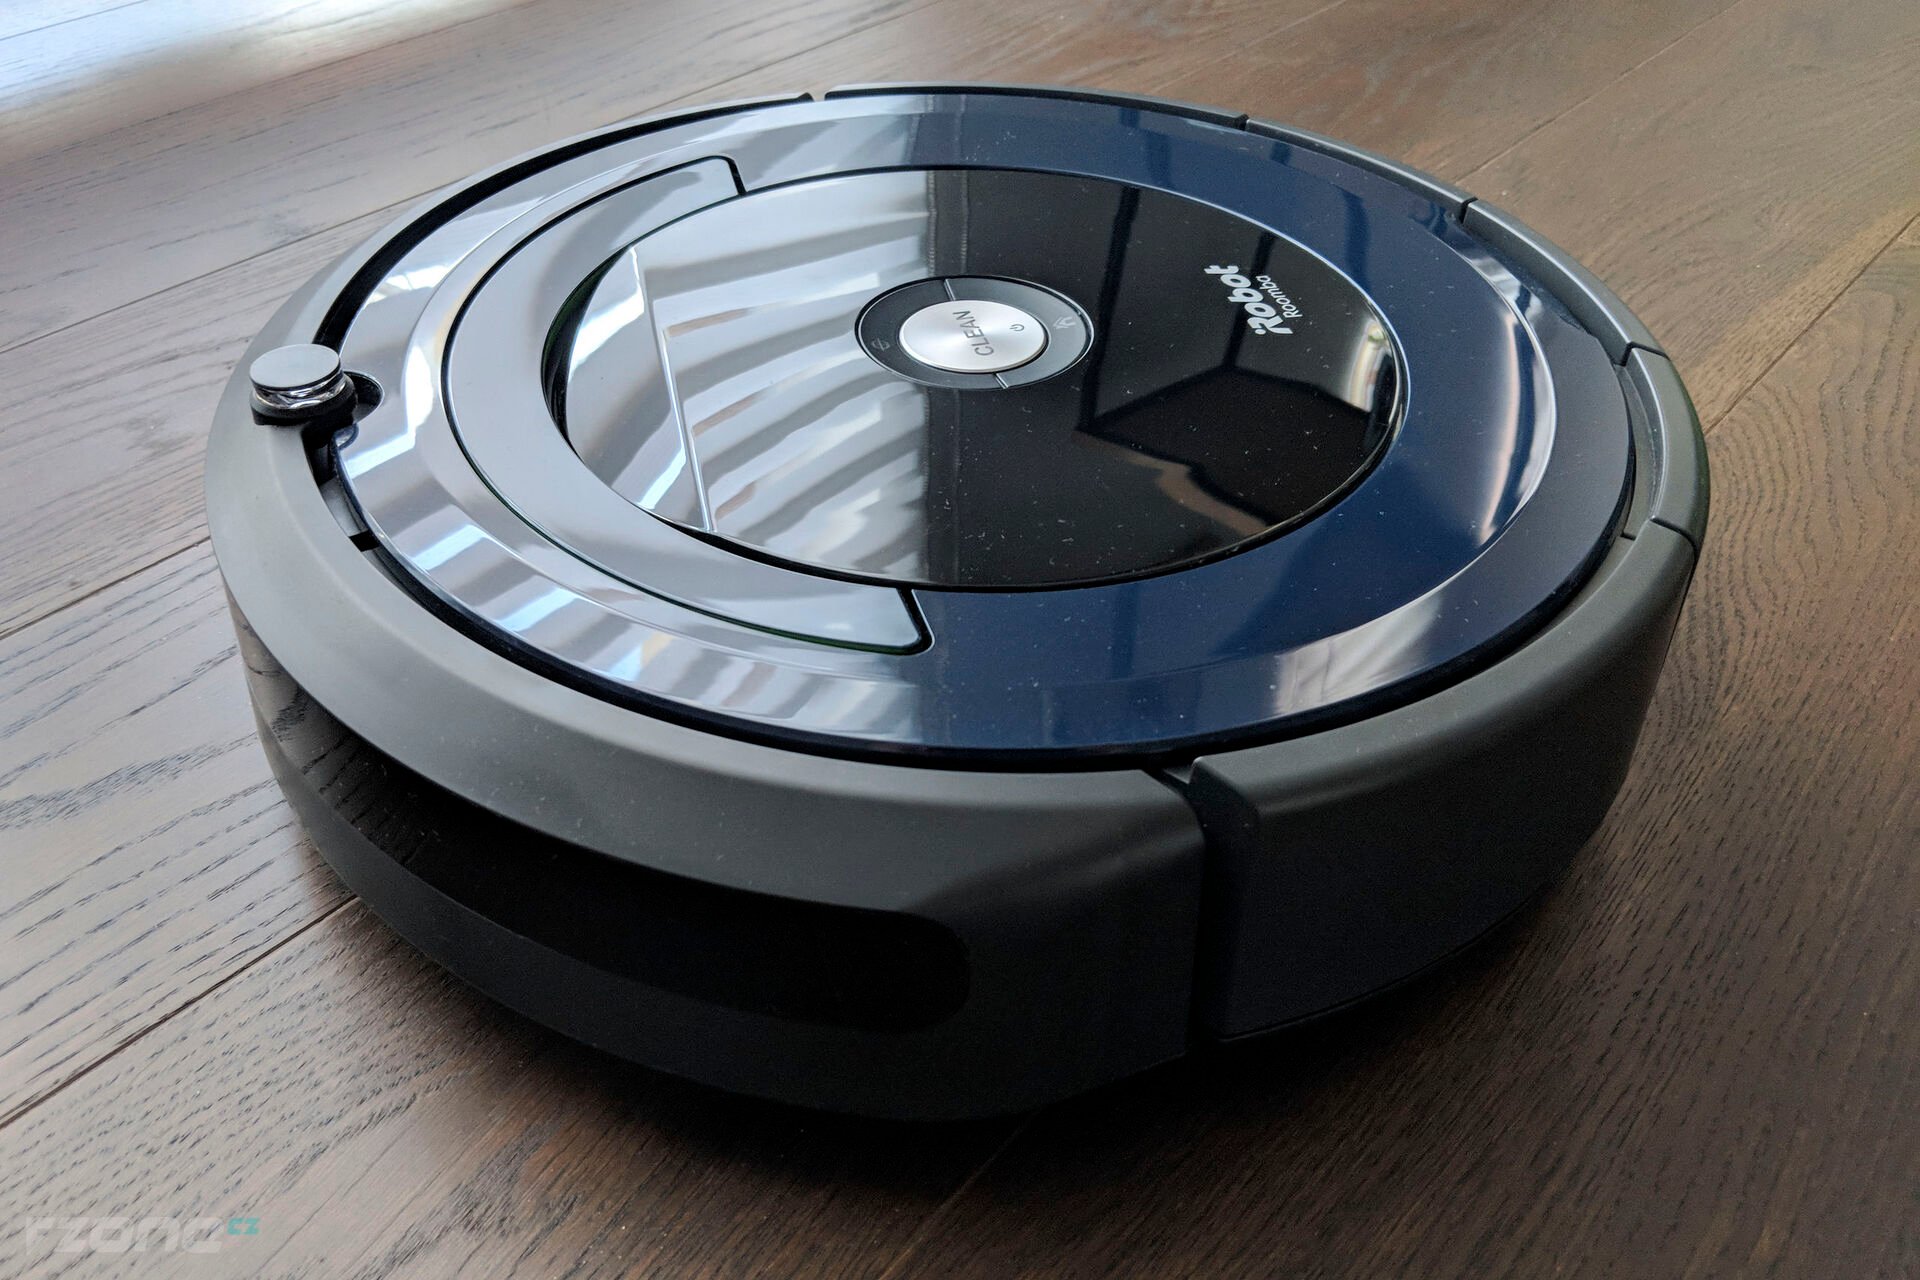 iRobot Roomba 695